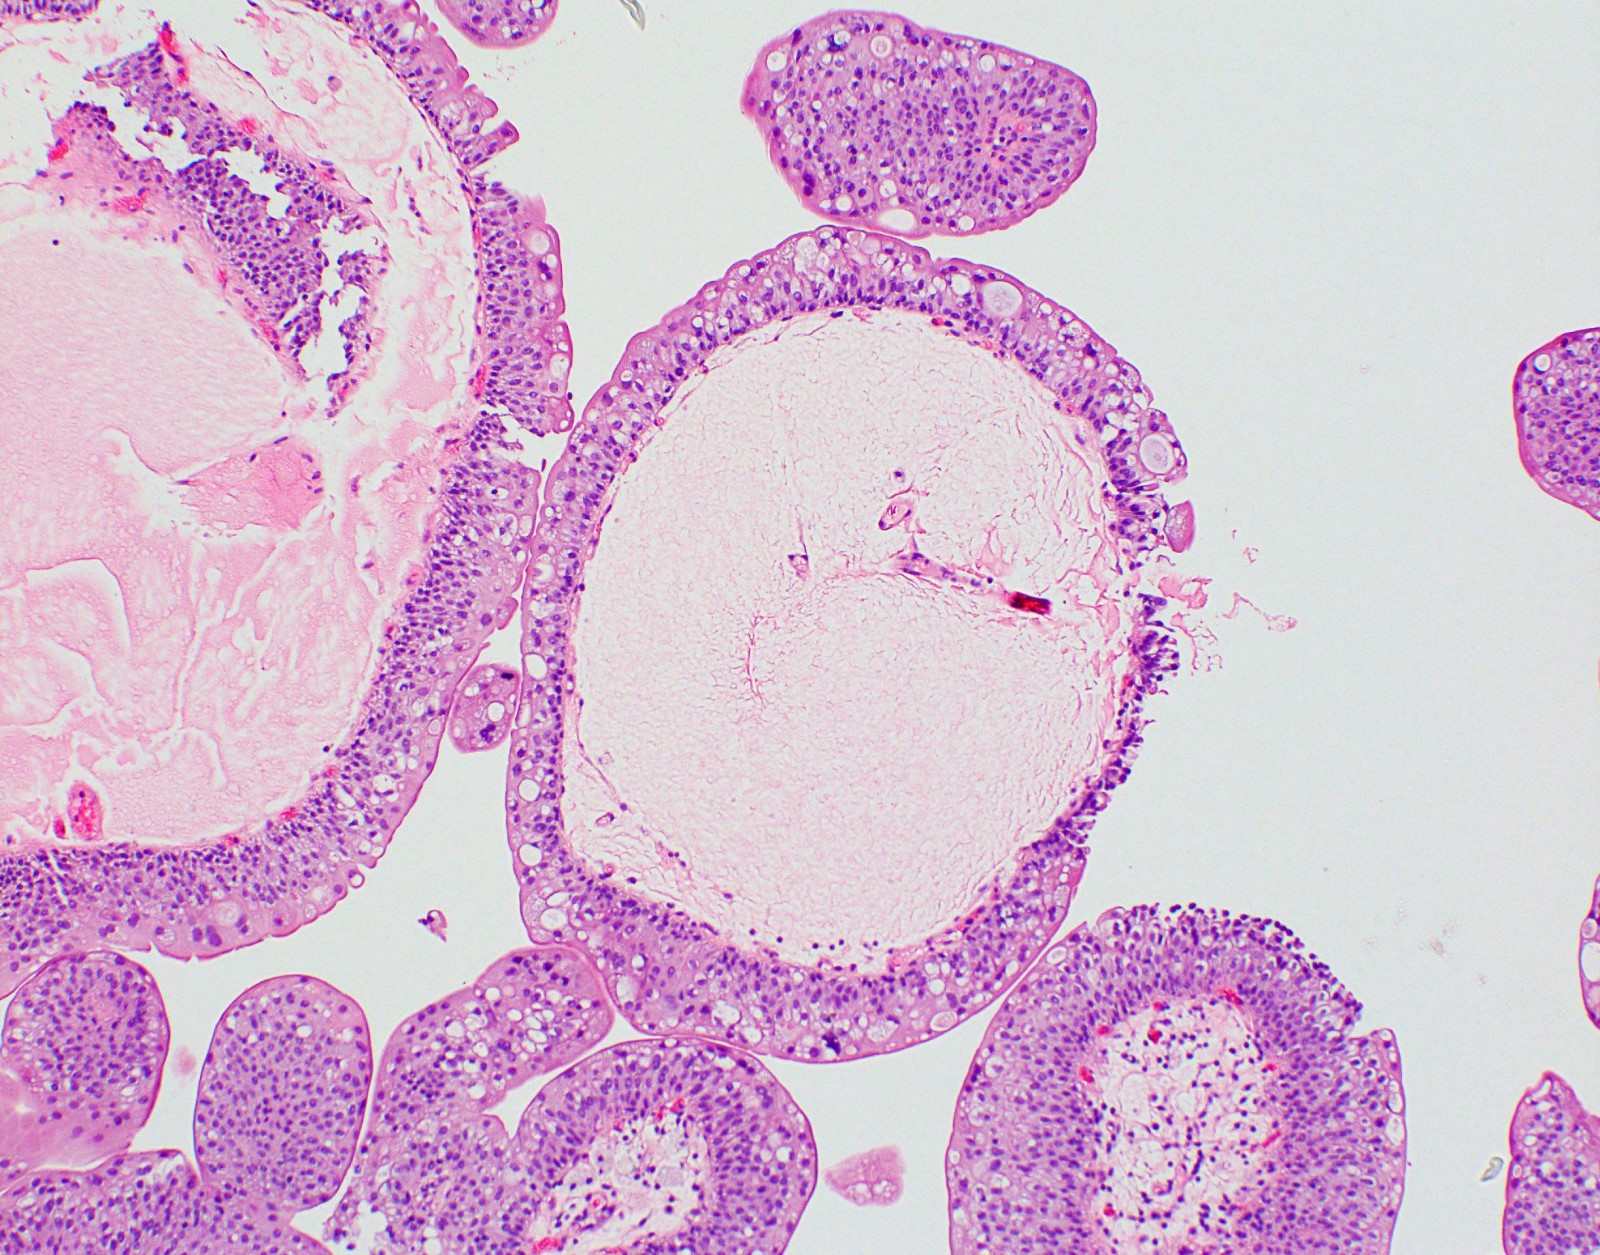 urothelial papilloma pathology outlines